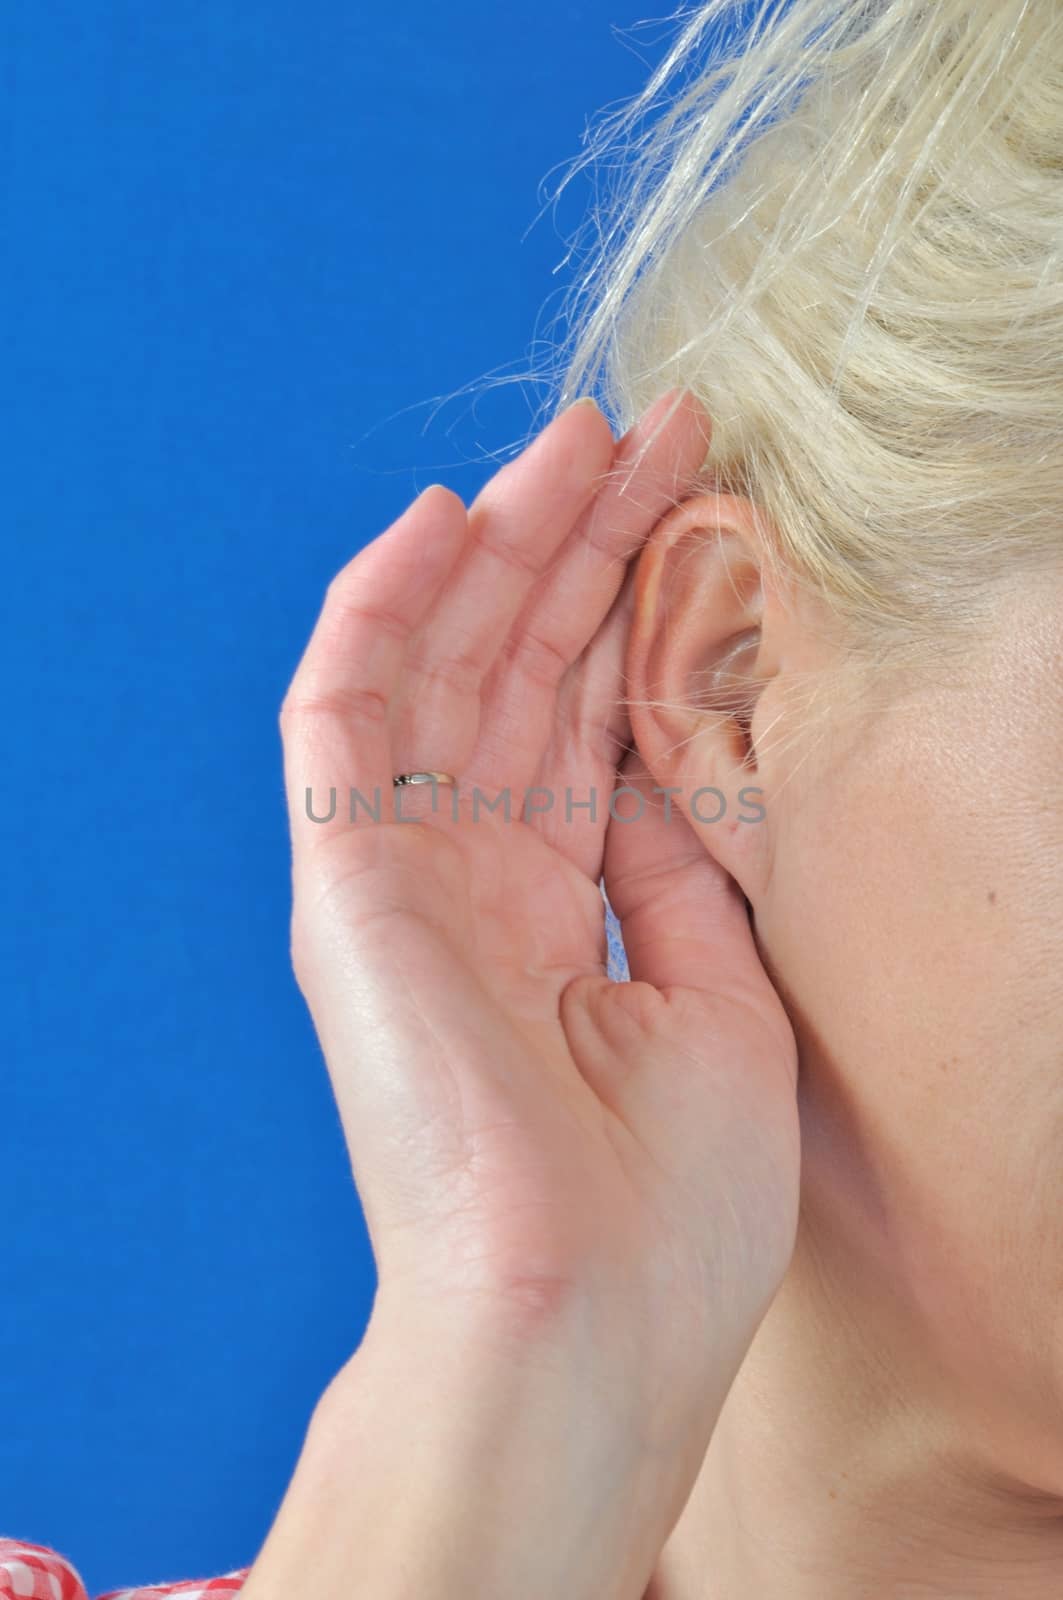 Woman hearing